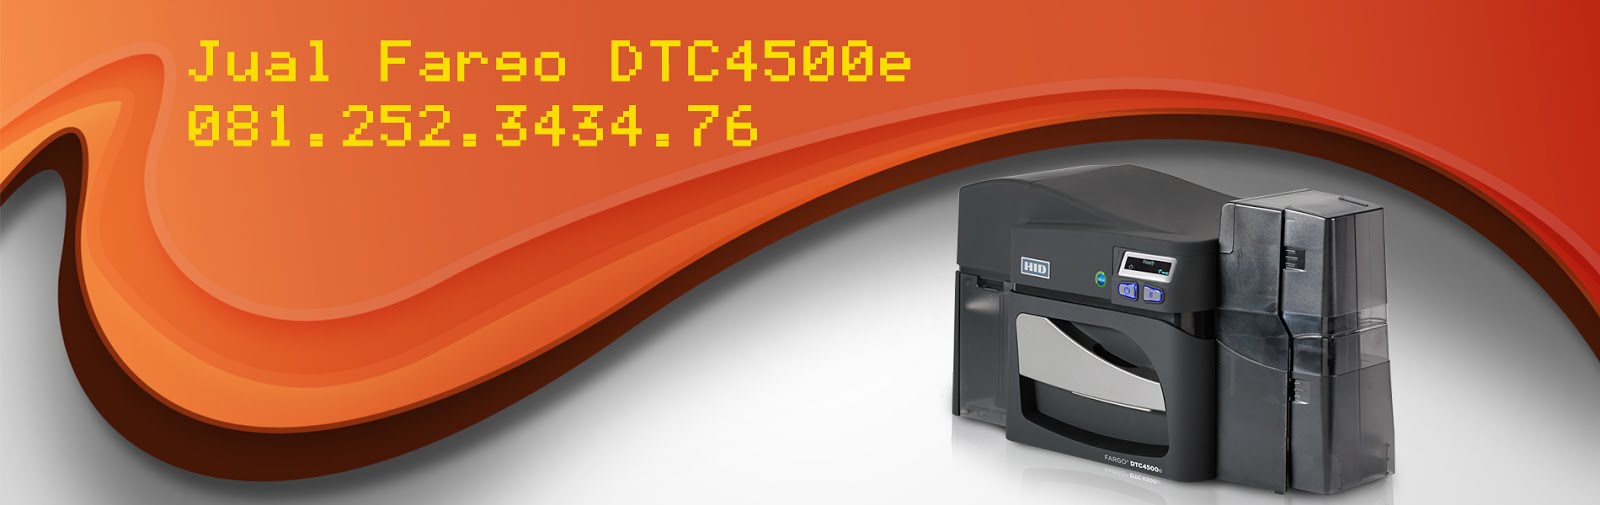 Jual Fargo DTC4500e - Printer Kartu | Printer ID Card | ID Card Printer - 0858 5006 4474 